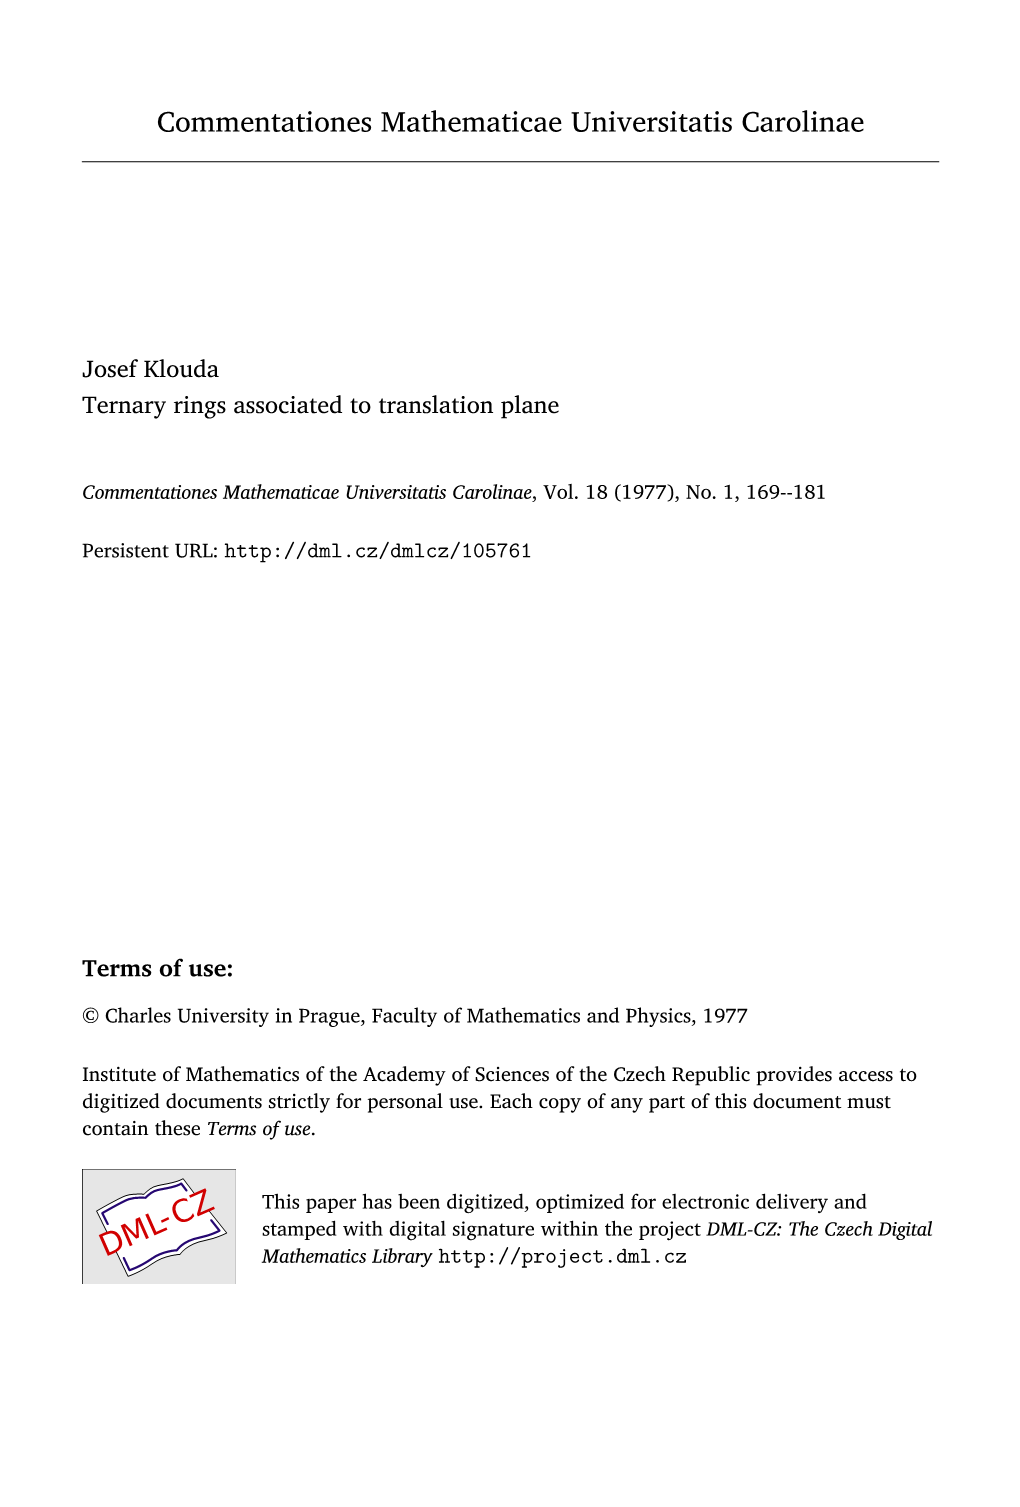 Ternary Rings Associated to Translation Plane